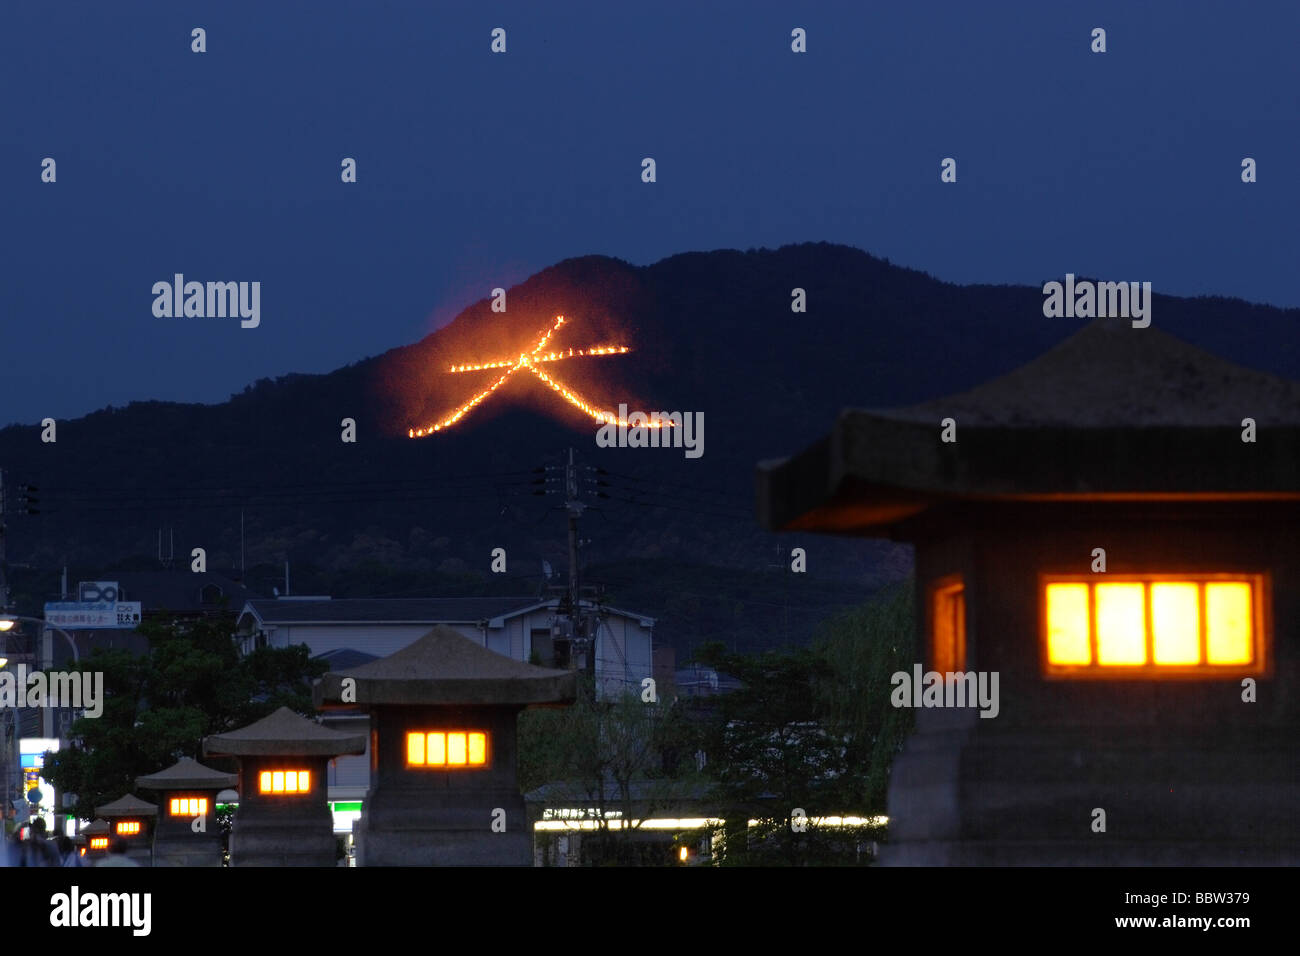 Japanese sign on hilltop with illuminated lights Stock Photo